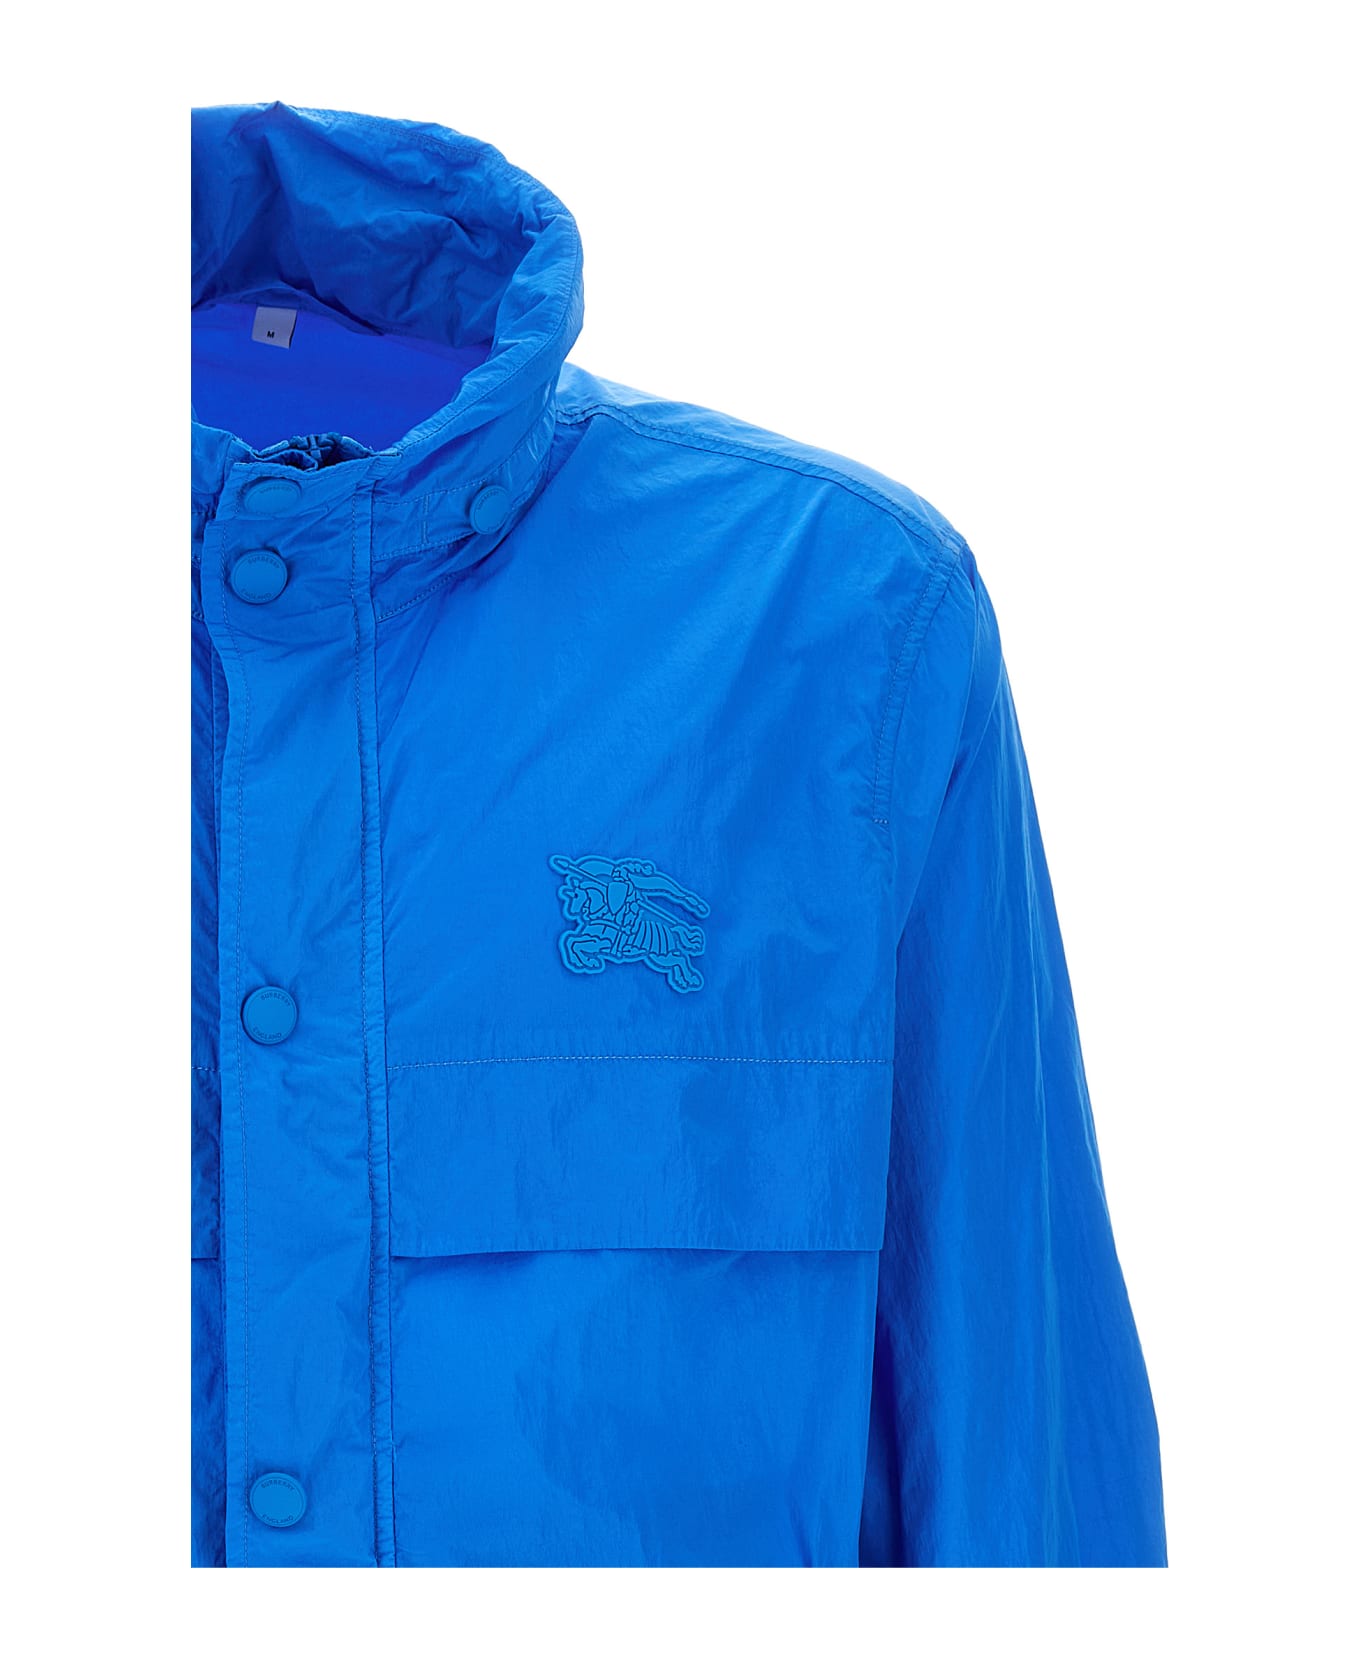 Burberry Harrogate' Jacket - Light Blue